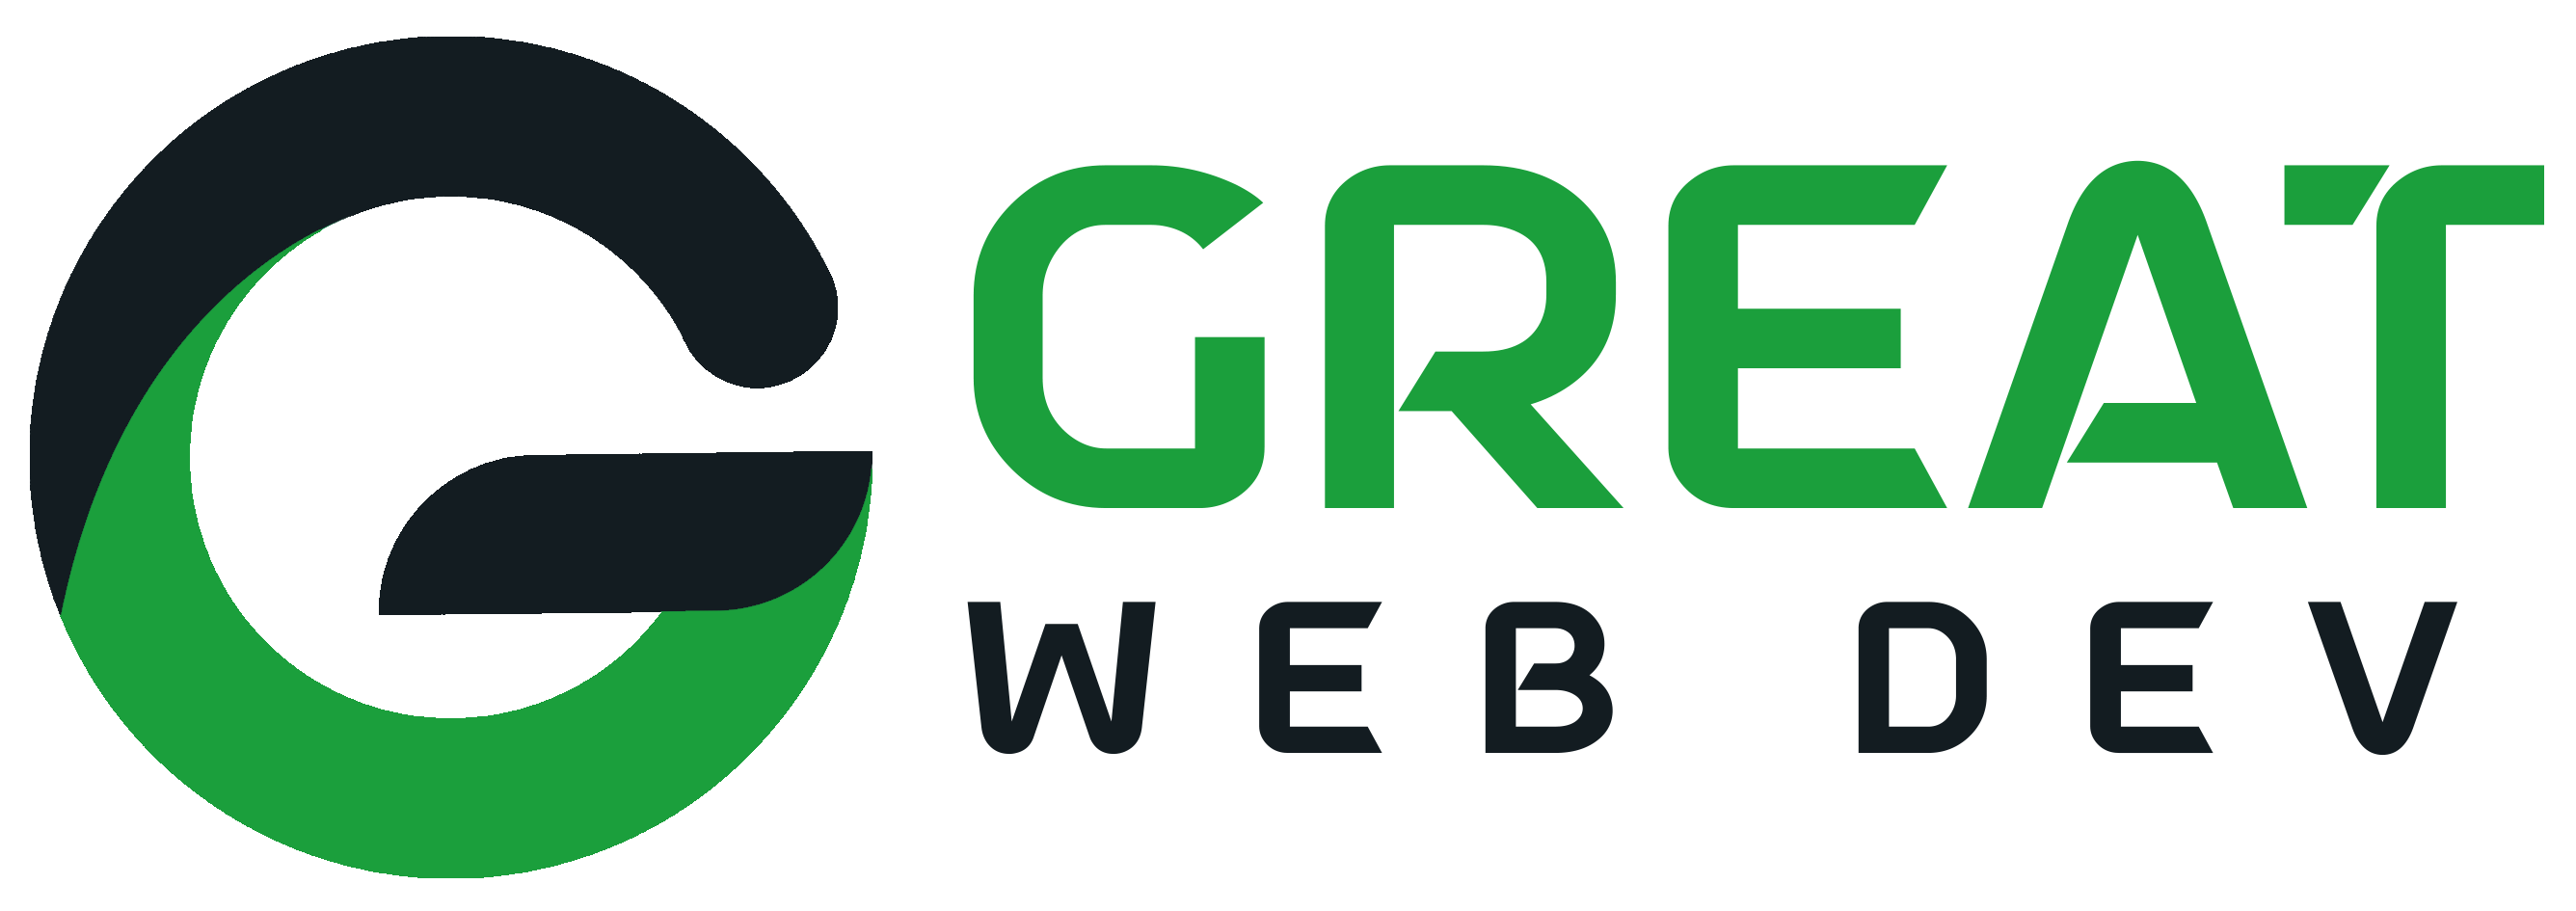 Web Development Blogs | GreatWebDev